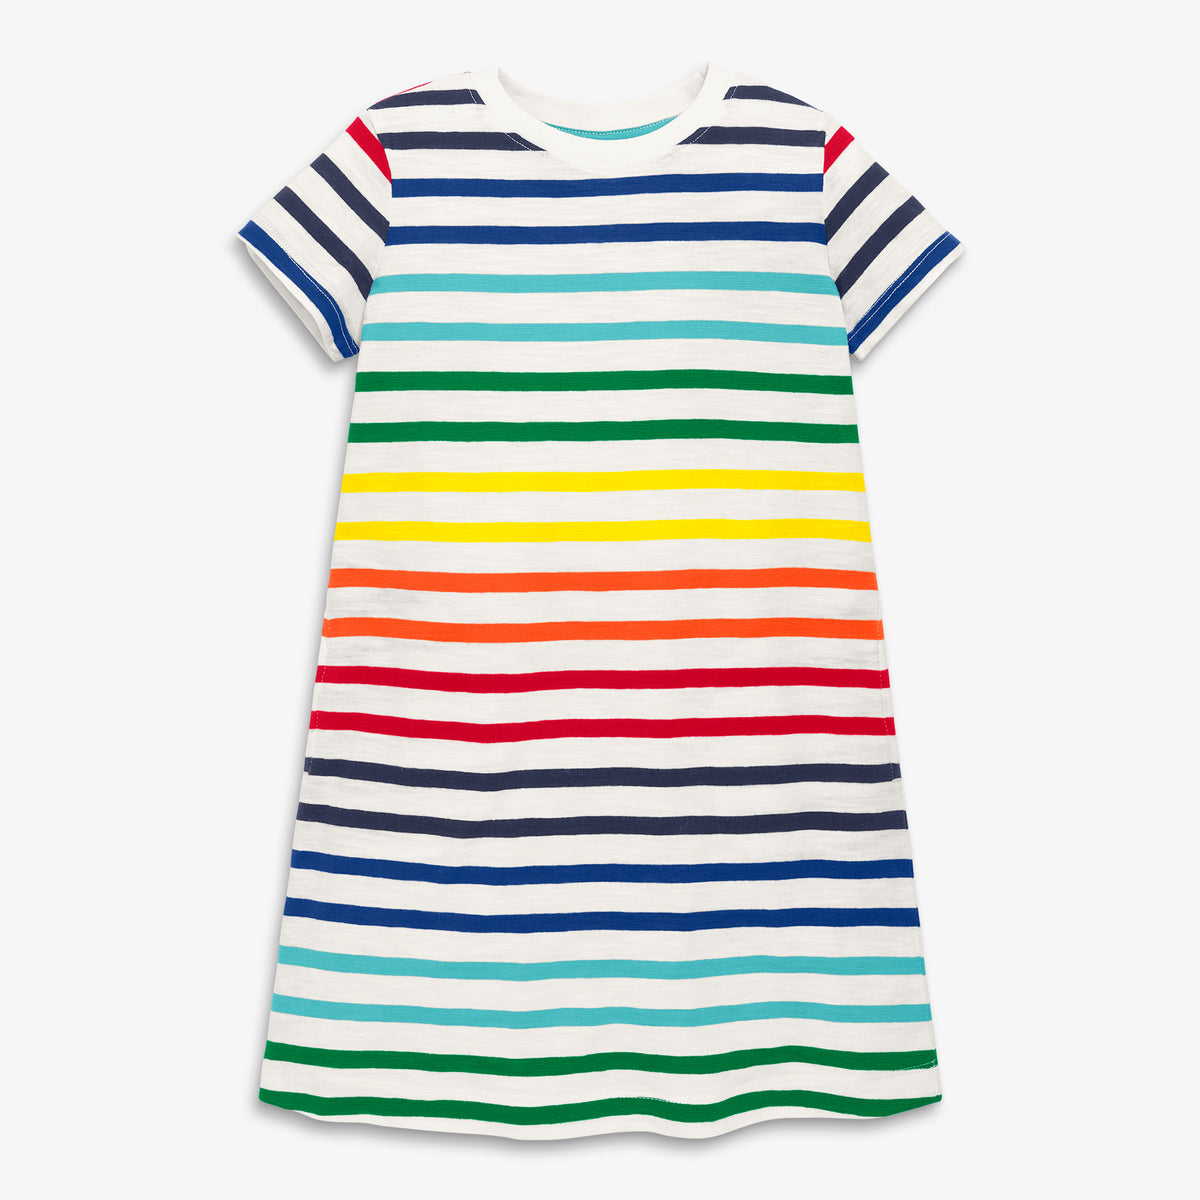 T-shirt dress in rainbow stripe | Primary.com